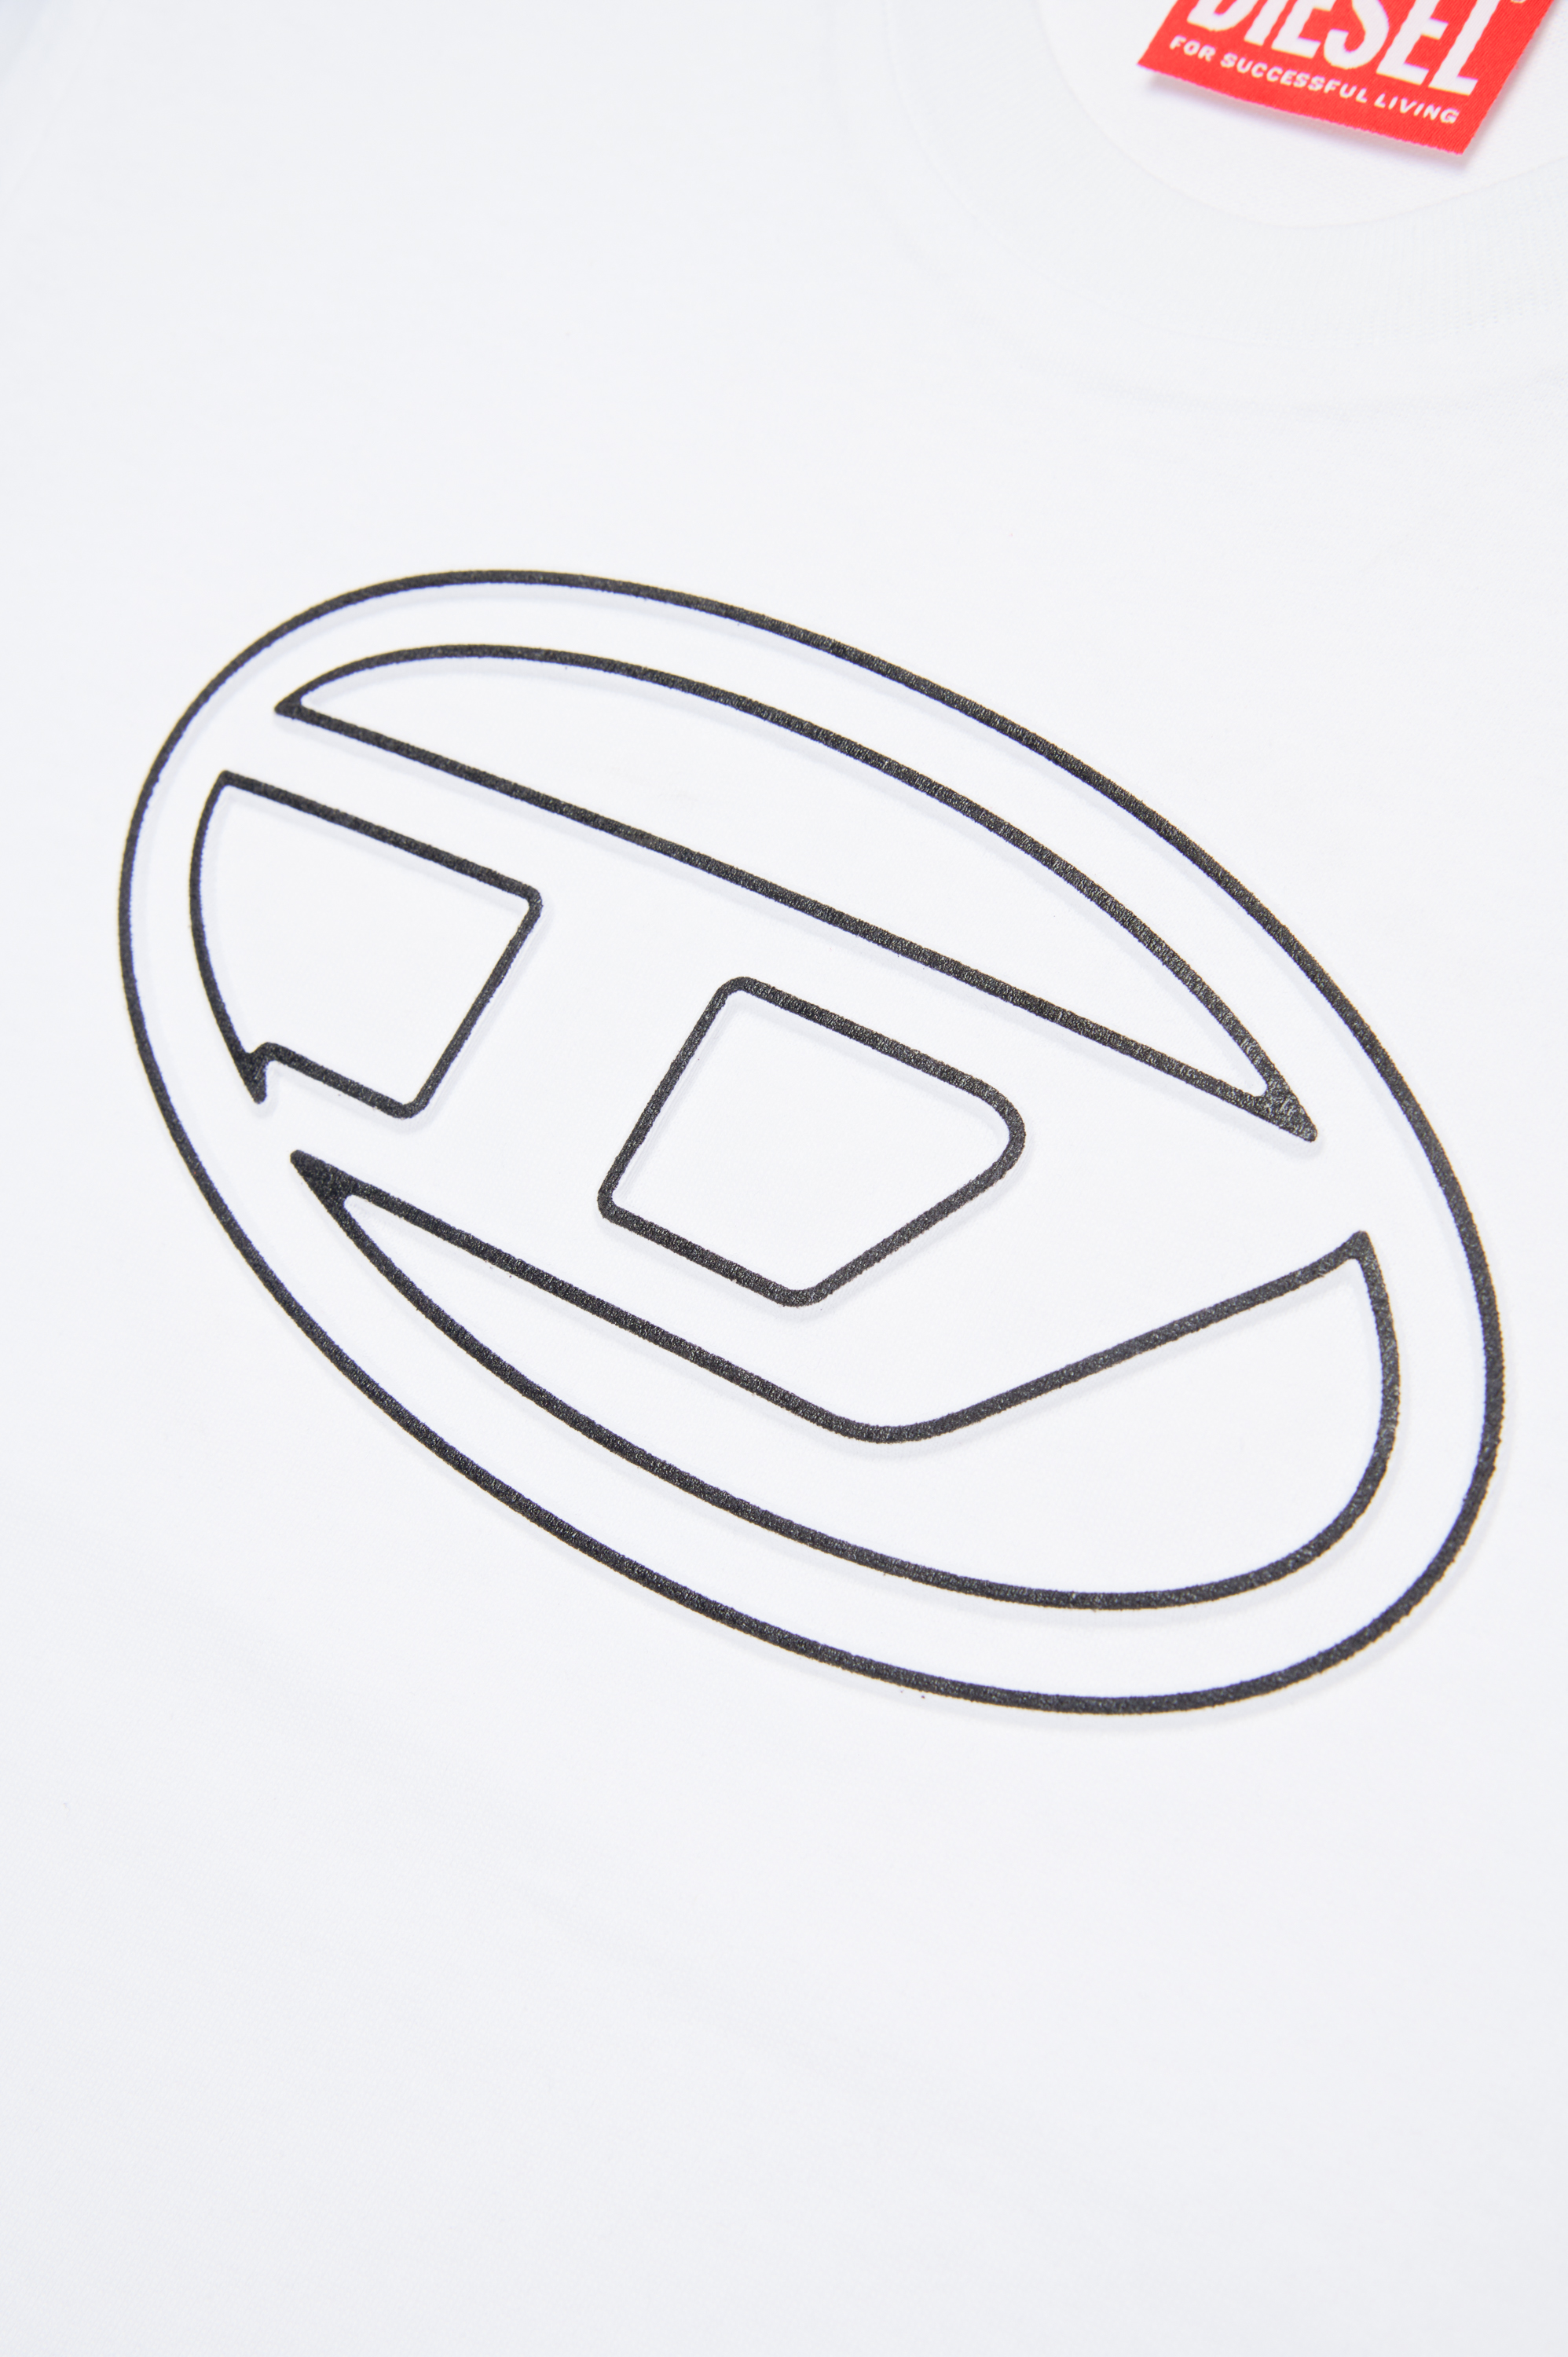 Diesel - TJUSTBIGOVAL OVER, Man T-shirt with Oval D outline logo in Black - Image 5